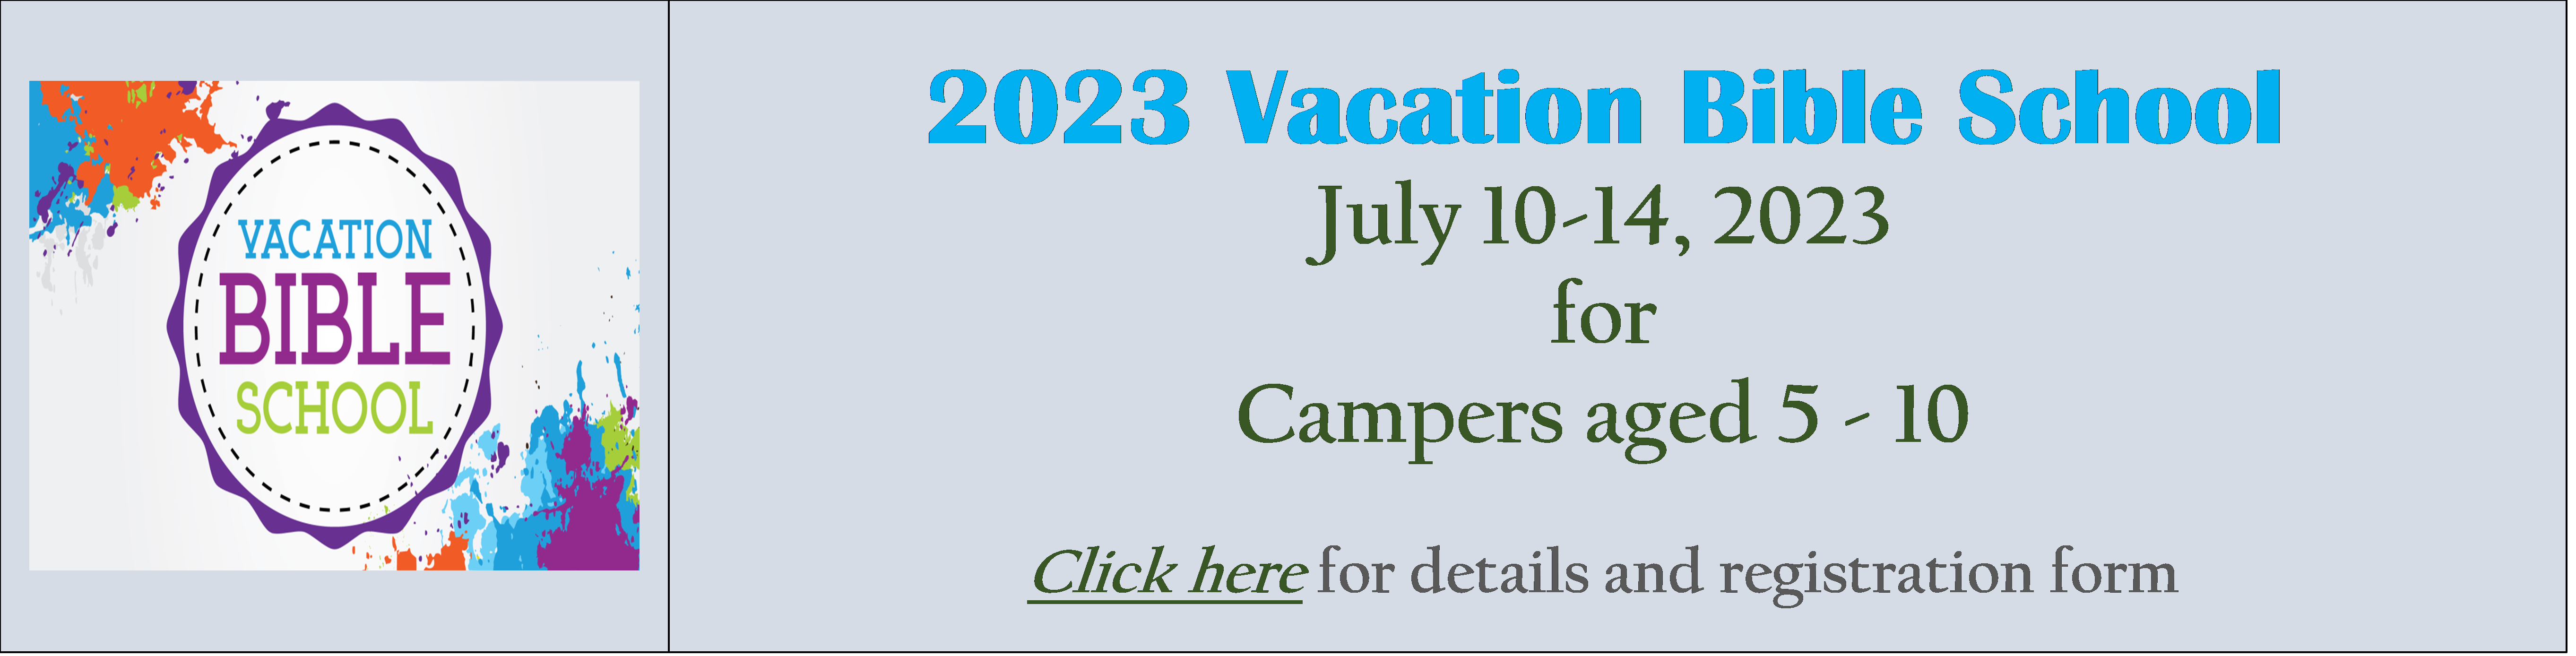 2023 Vacation Bible School-Letter to Parents & Registration Form